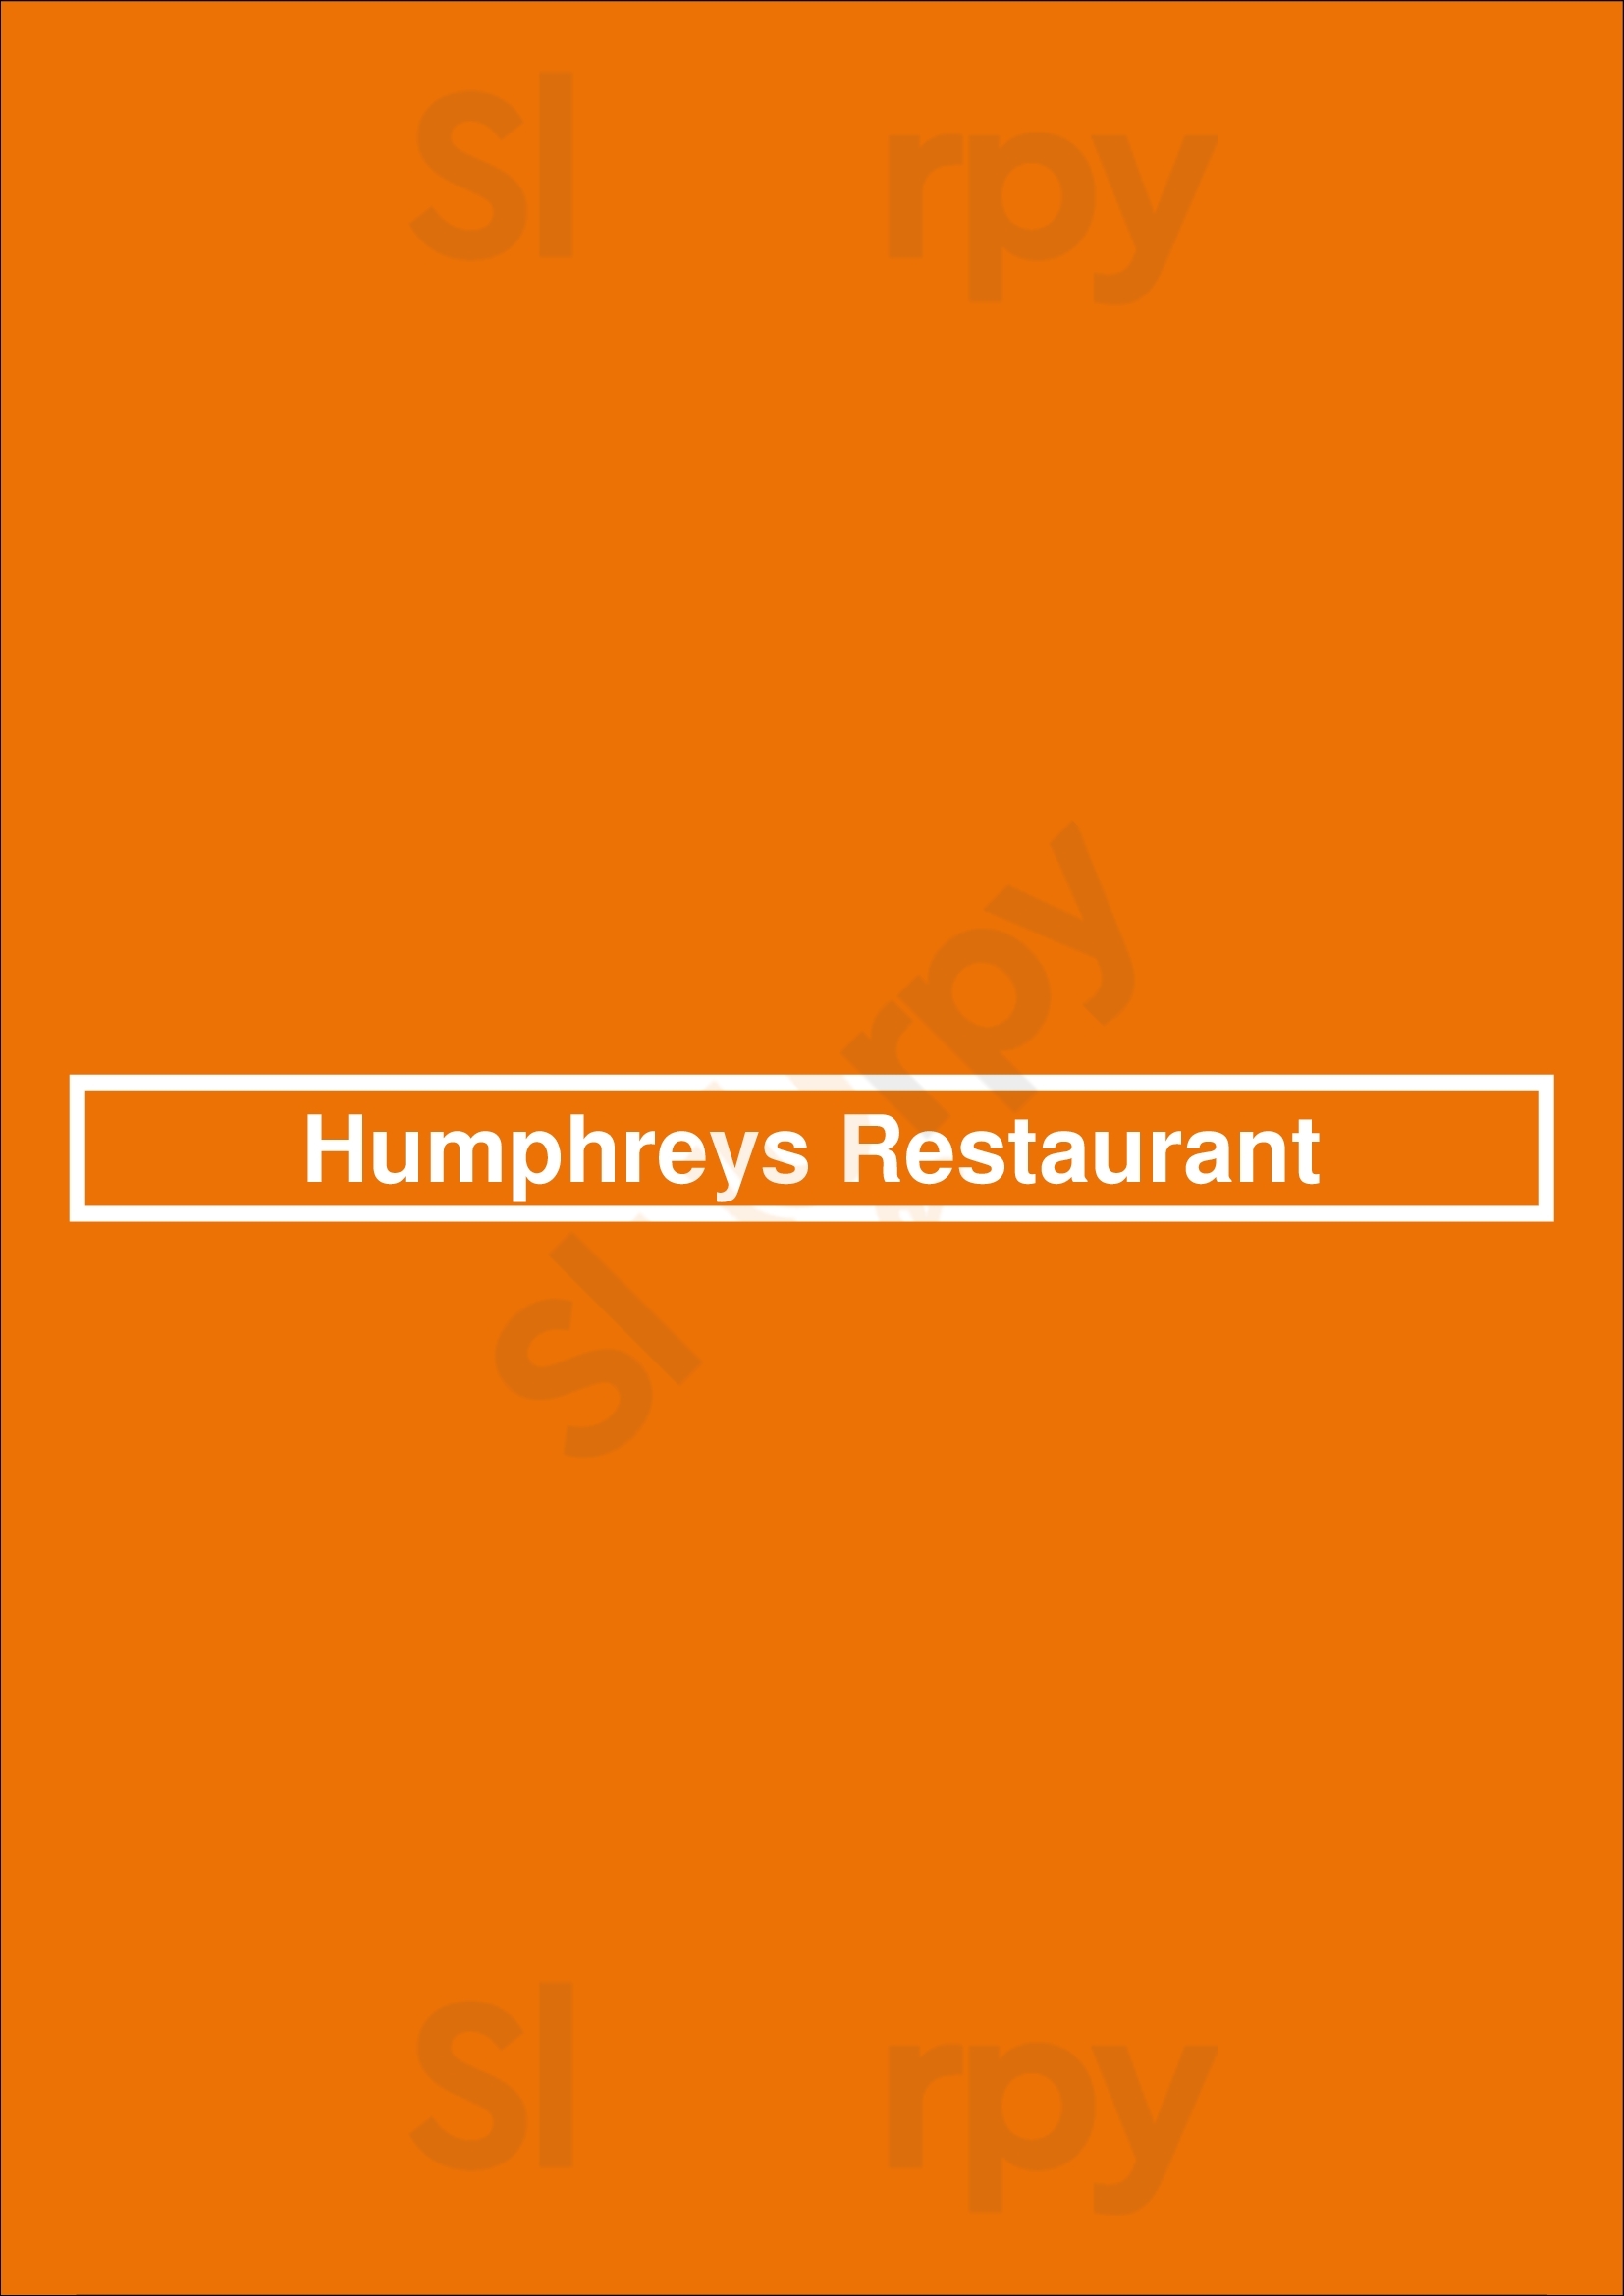 Humphreys Restaurant San Diego Menu - 1